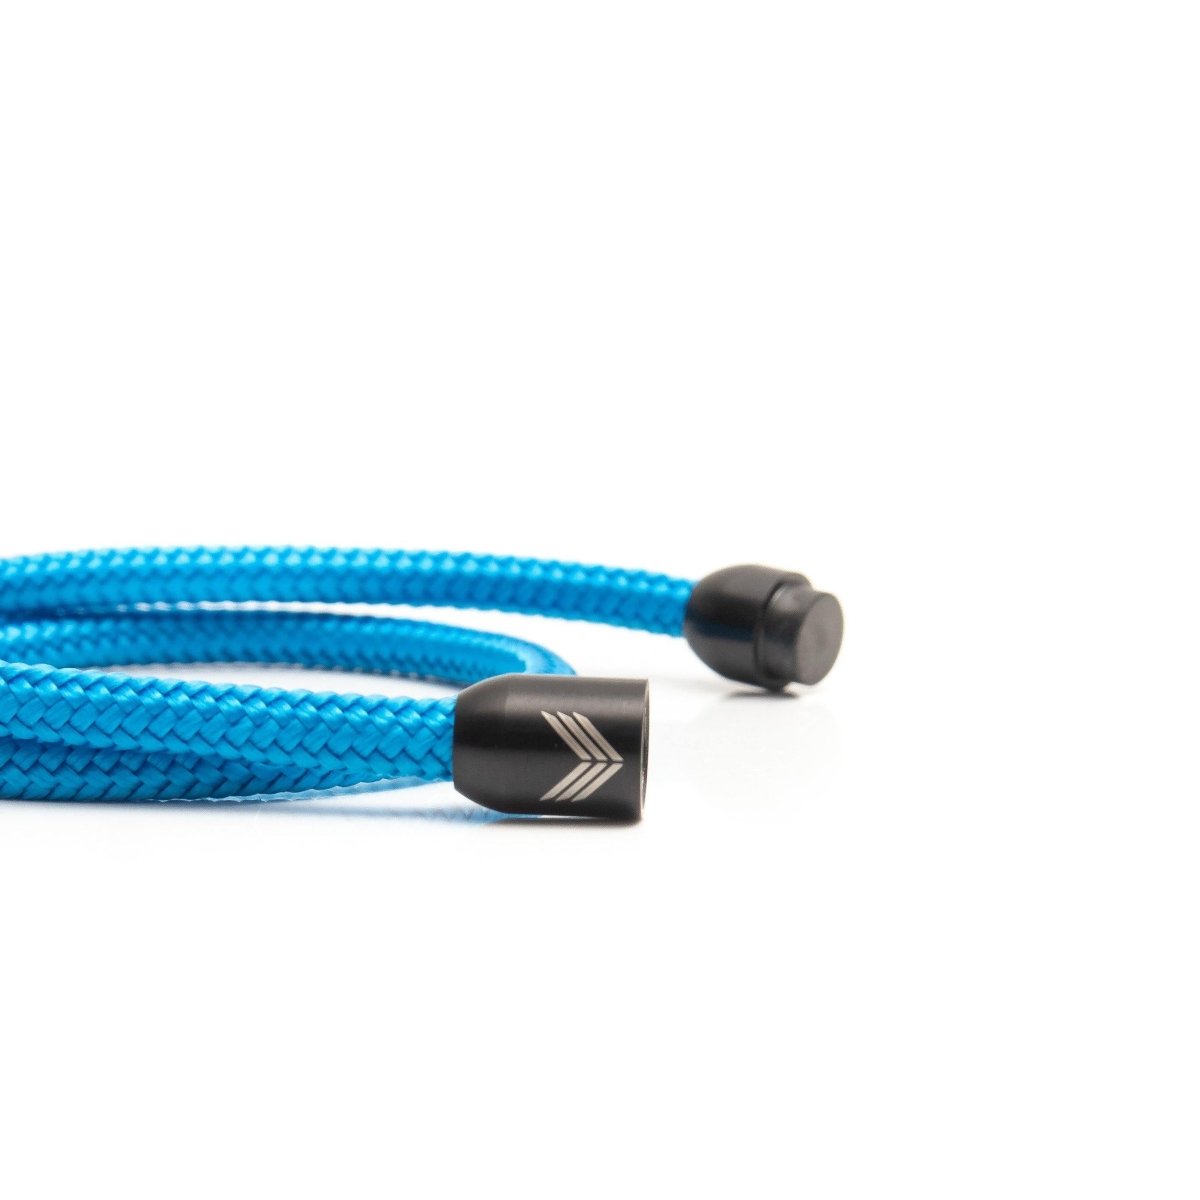 Aqua blue and black paracord bracelet 7.5